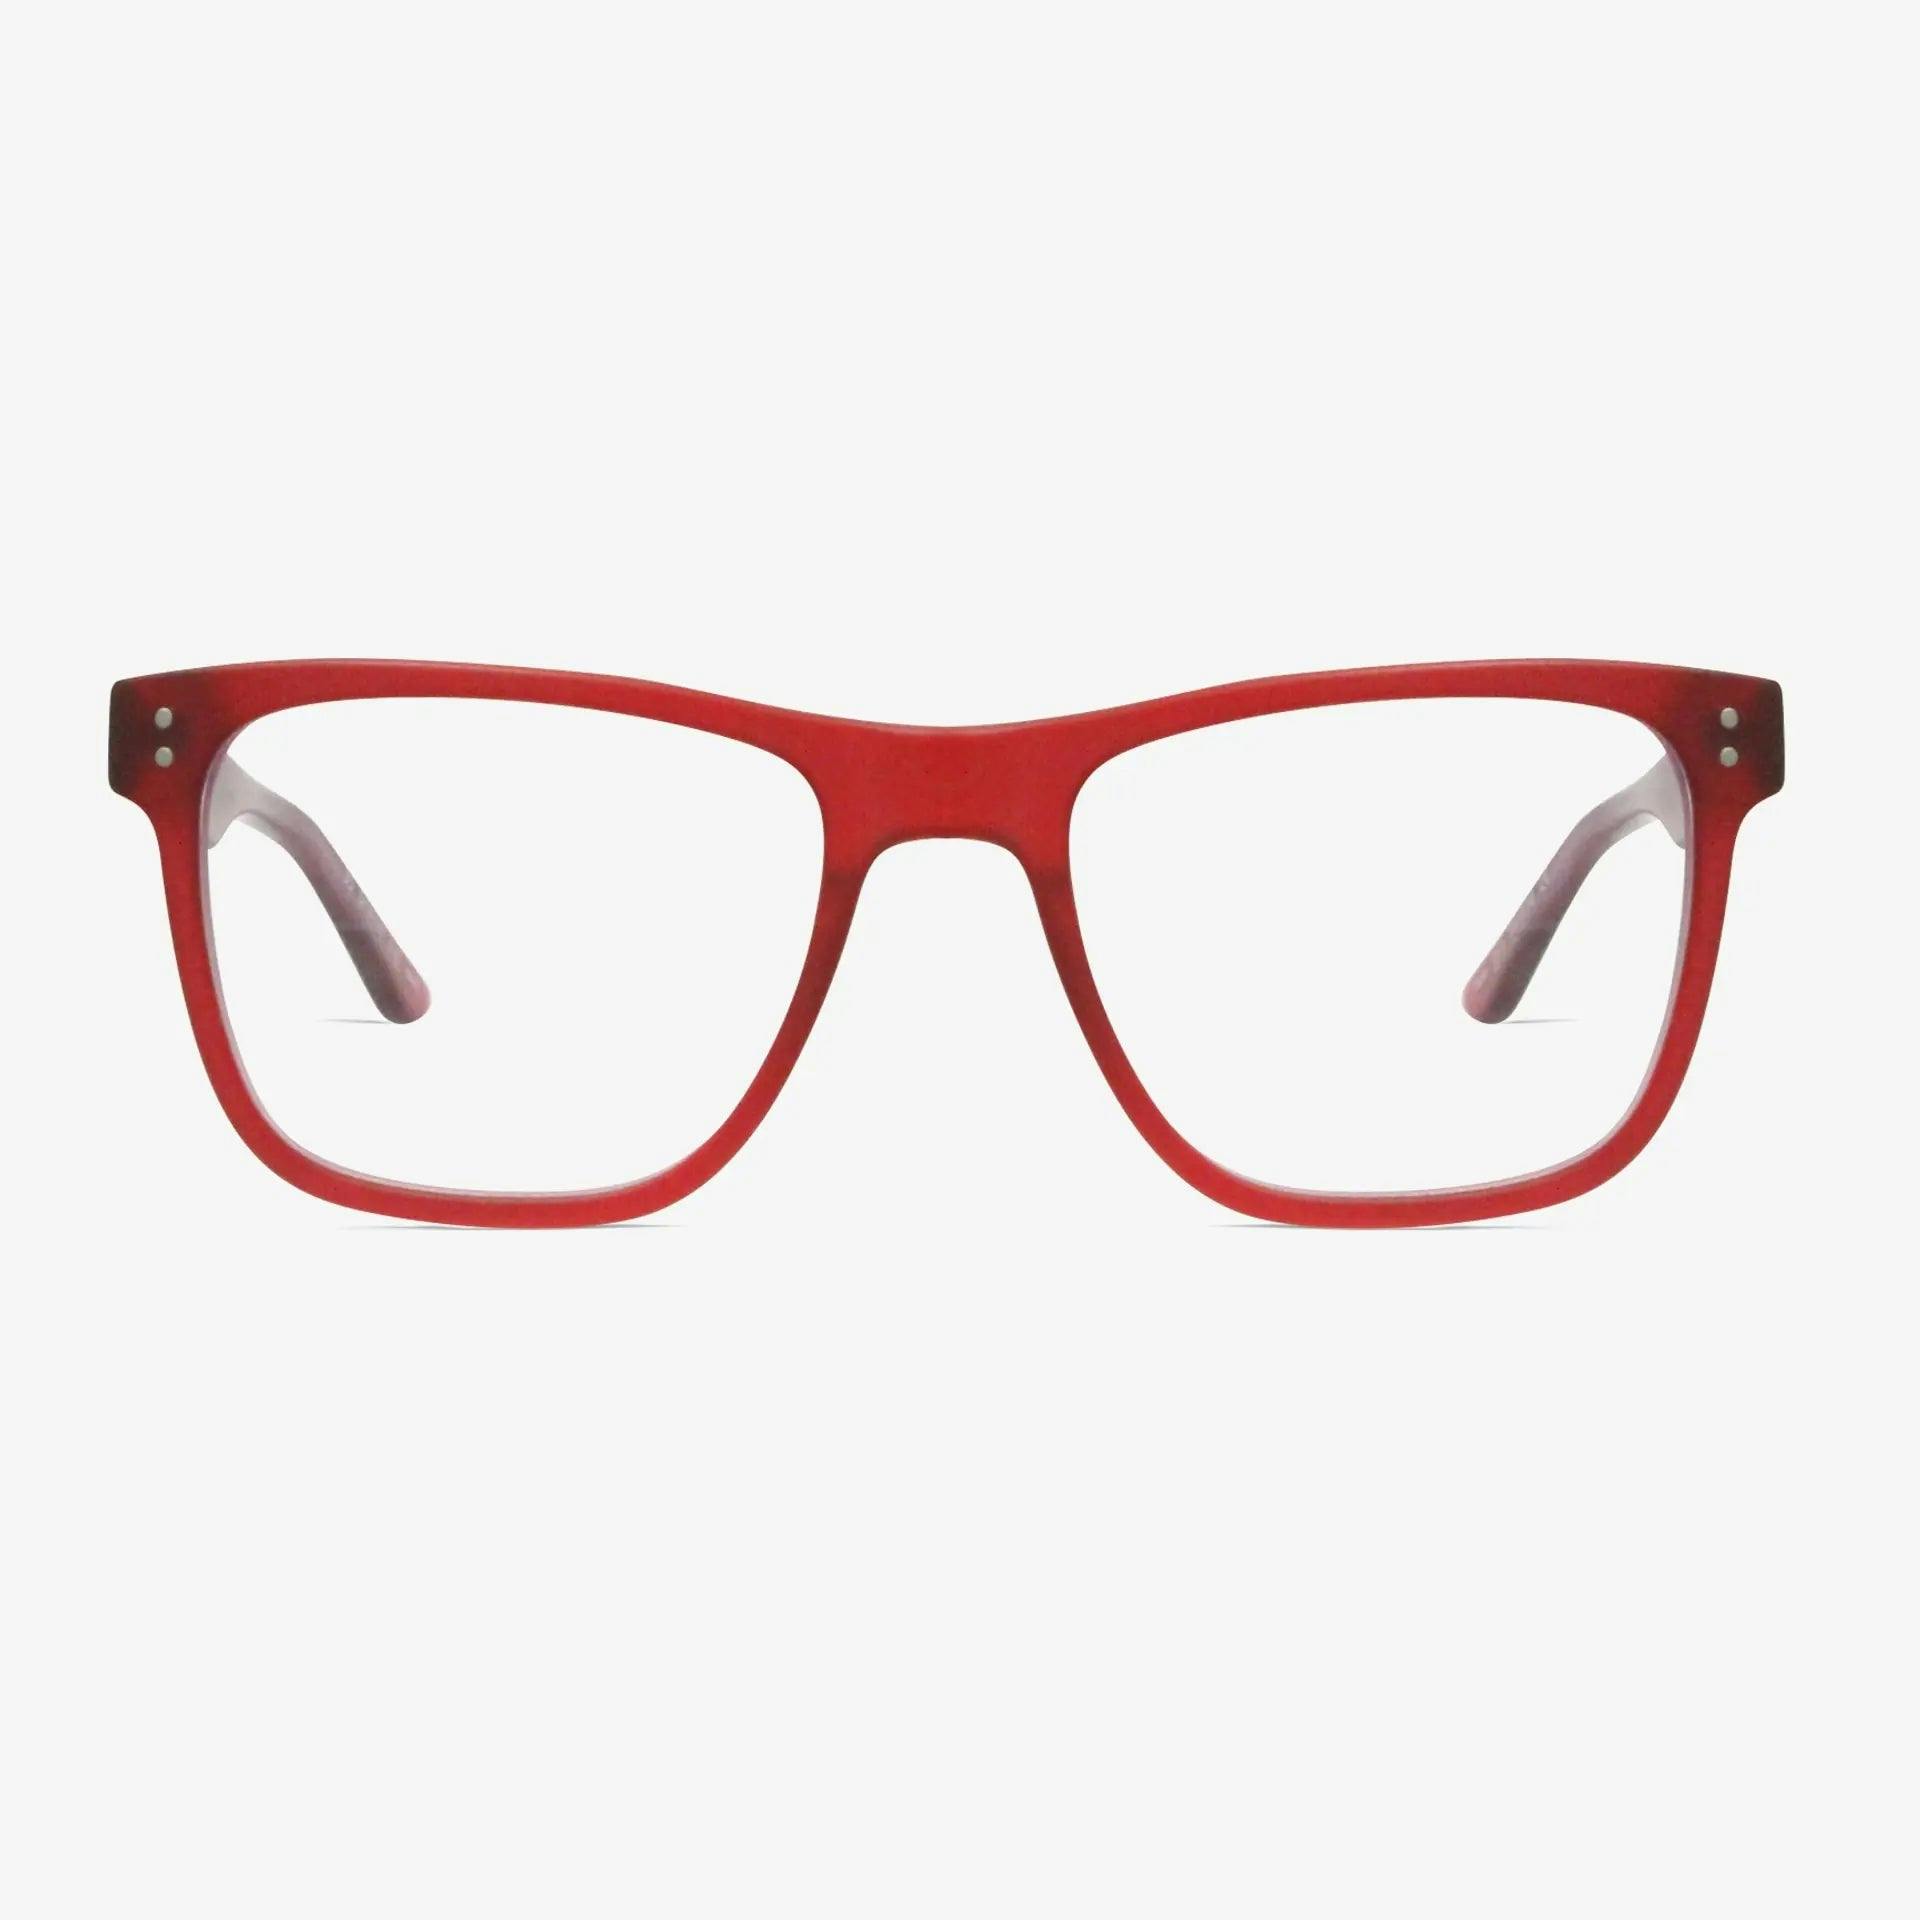 Huxley glasses | Fabes Minnesota Maroon Matte 